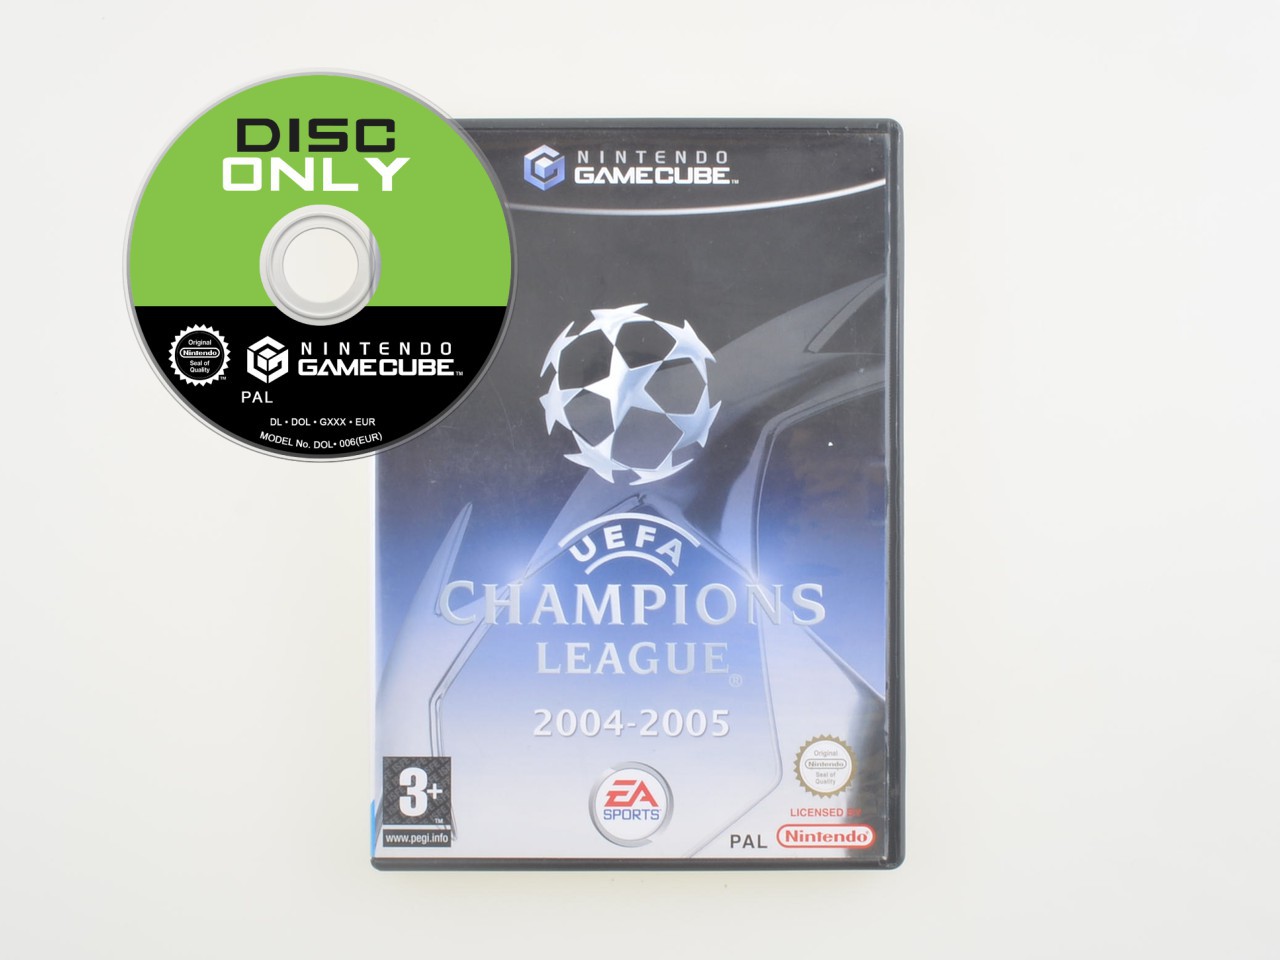 UEFA Champions League 2004-2005 - Disc Only Kopen | Gamecube Games